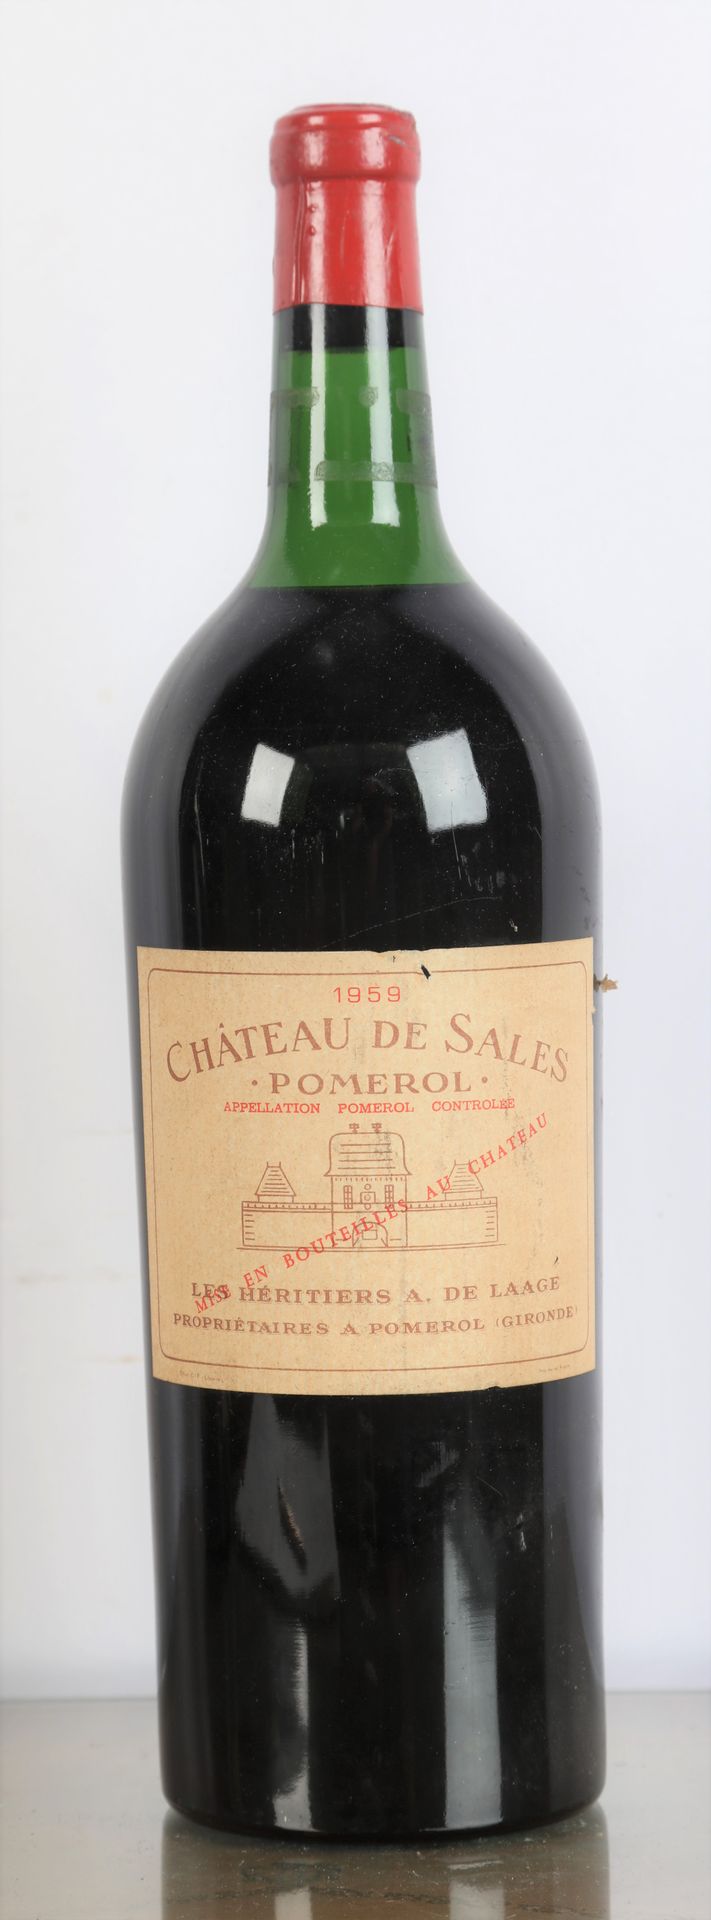 Null 1 Magnun Château de Sales, Pomerol, 1959 (ref:20)